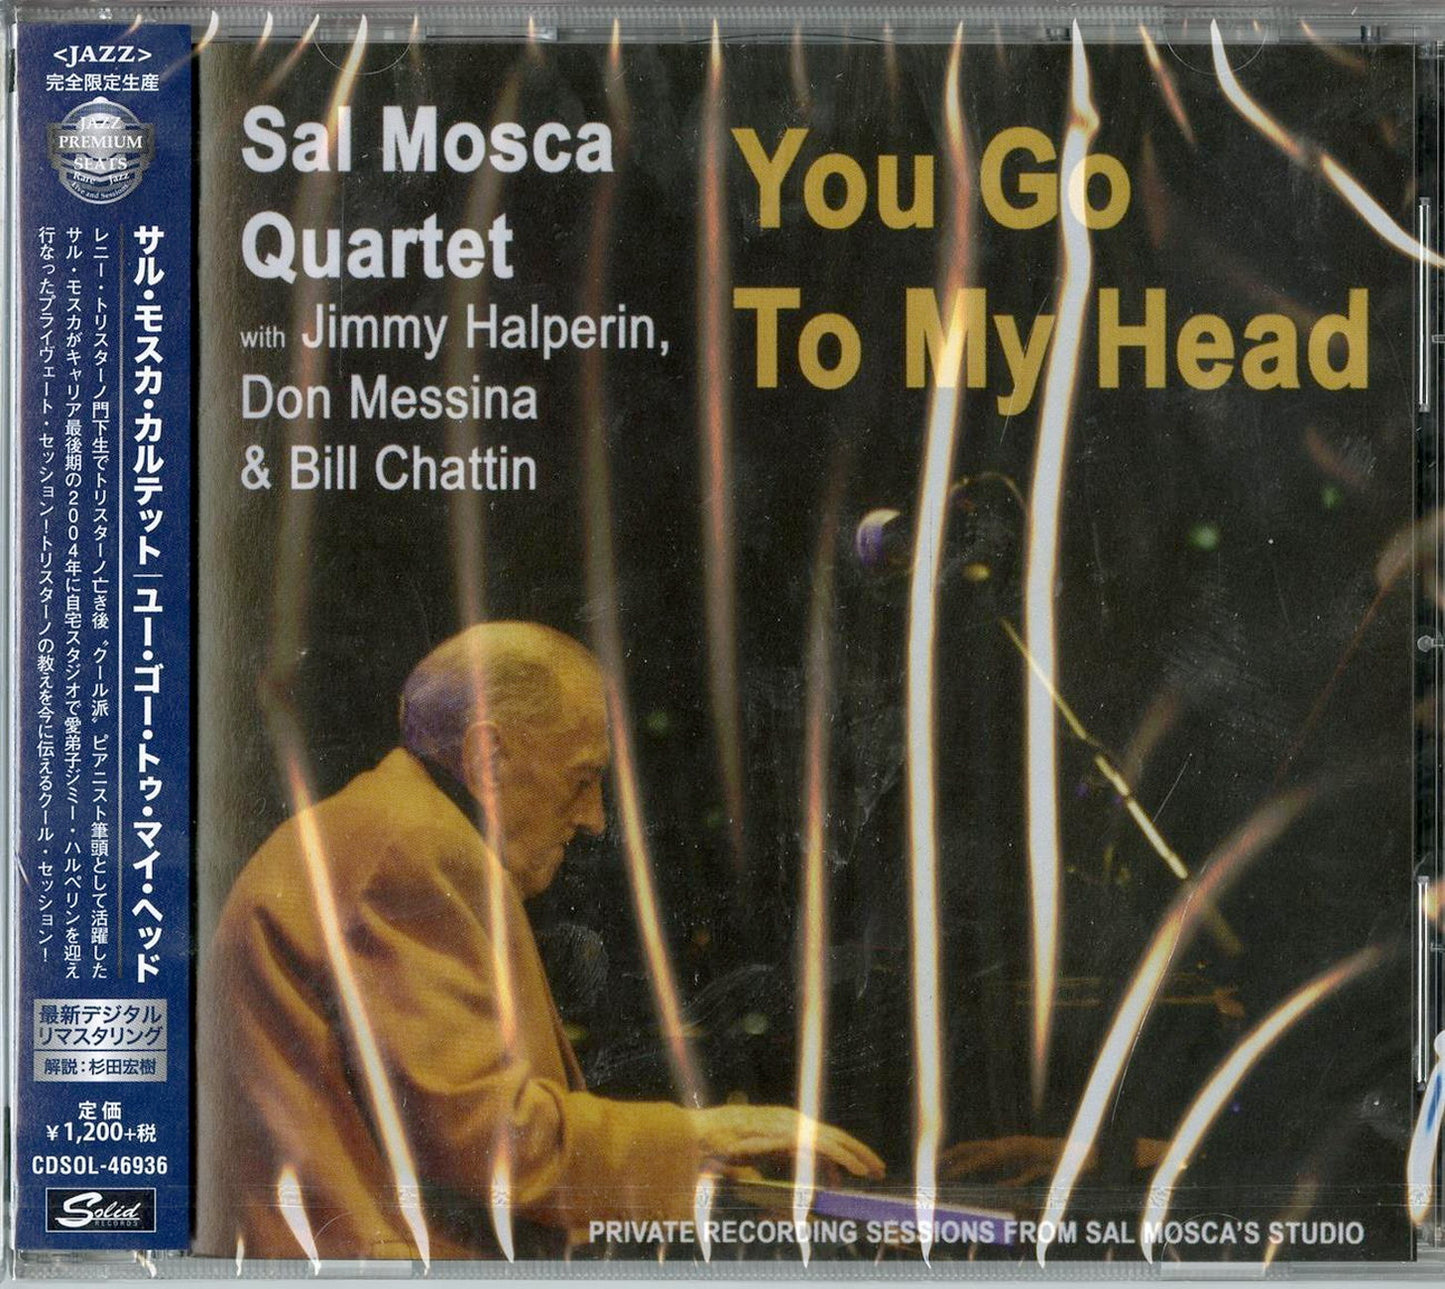 Sal Mosca Quartet - You Go To My Head - Japan  CD Limited Edition